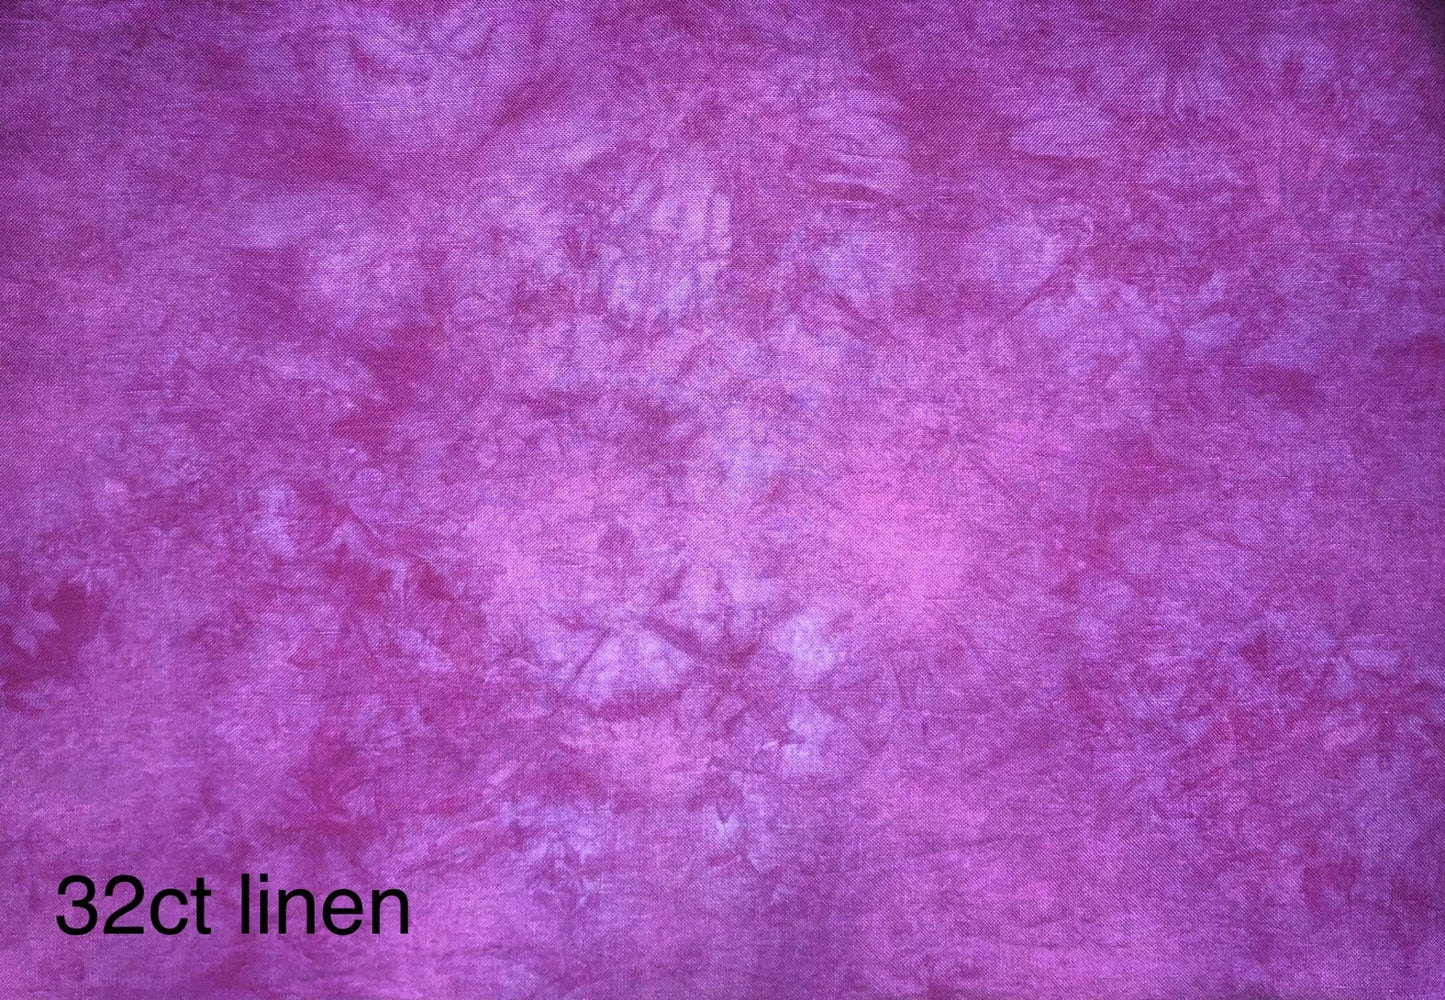 Linen - Ballade - Dyeing for Cross Stitch